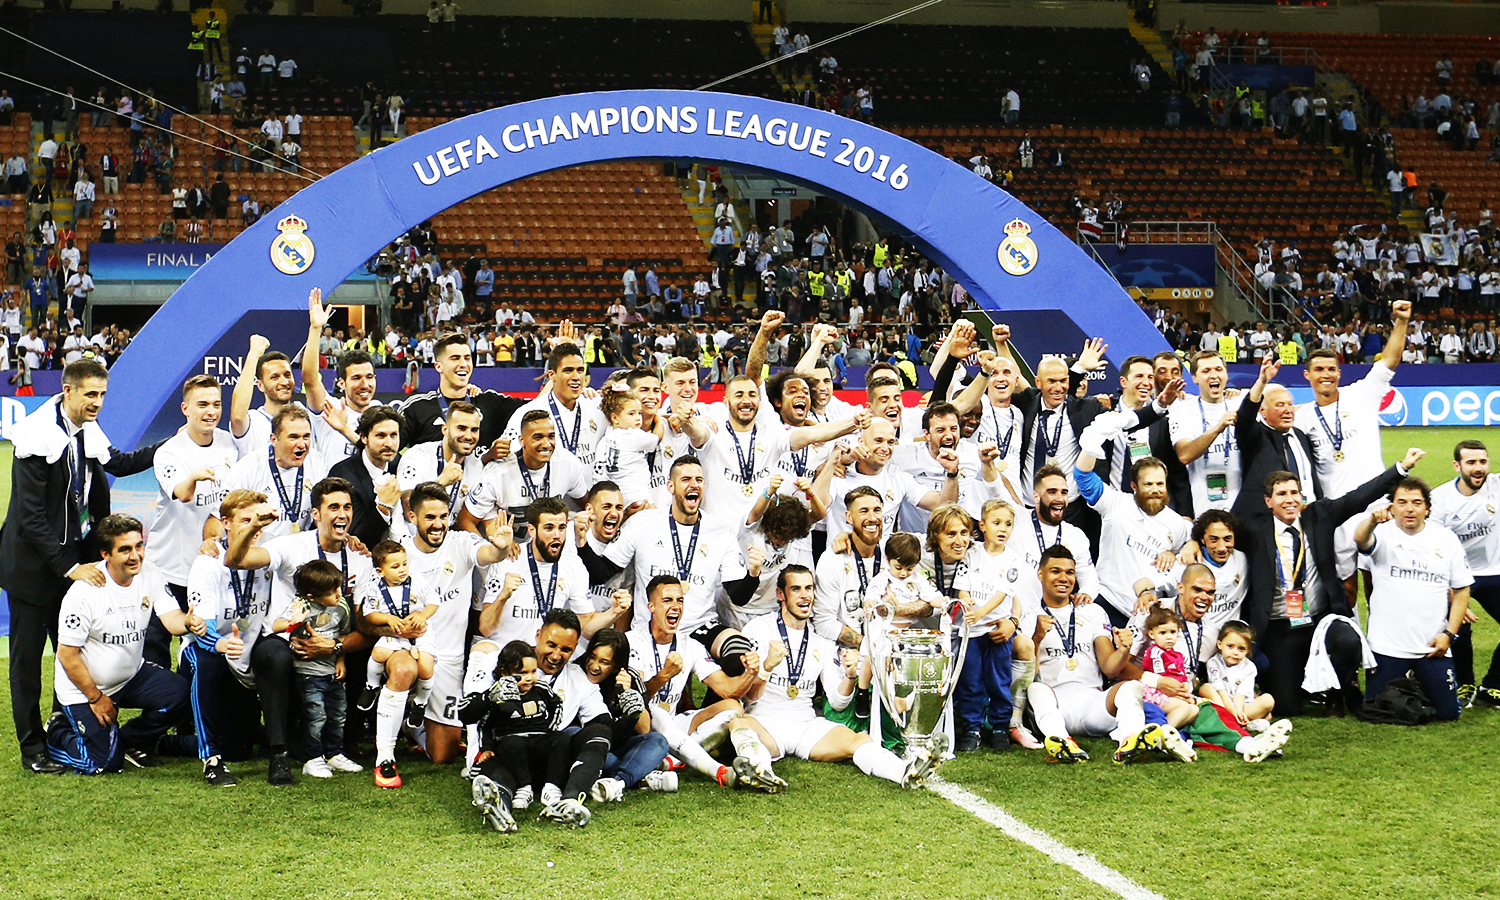 2015-16 Champions League Winners - Real Madrid